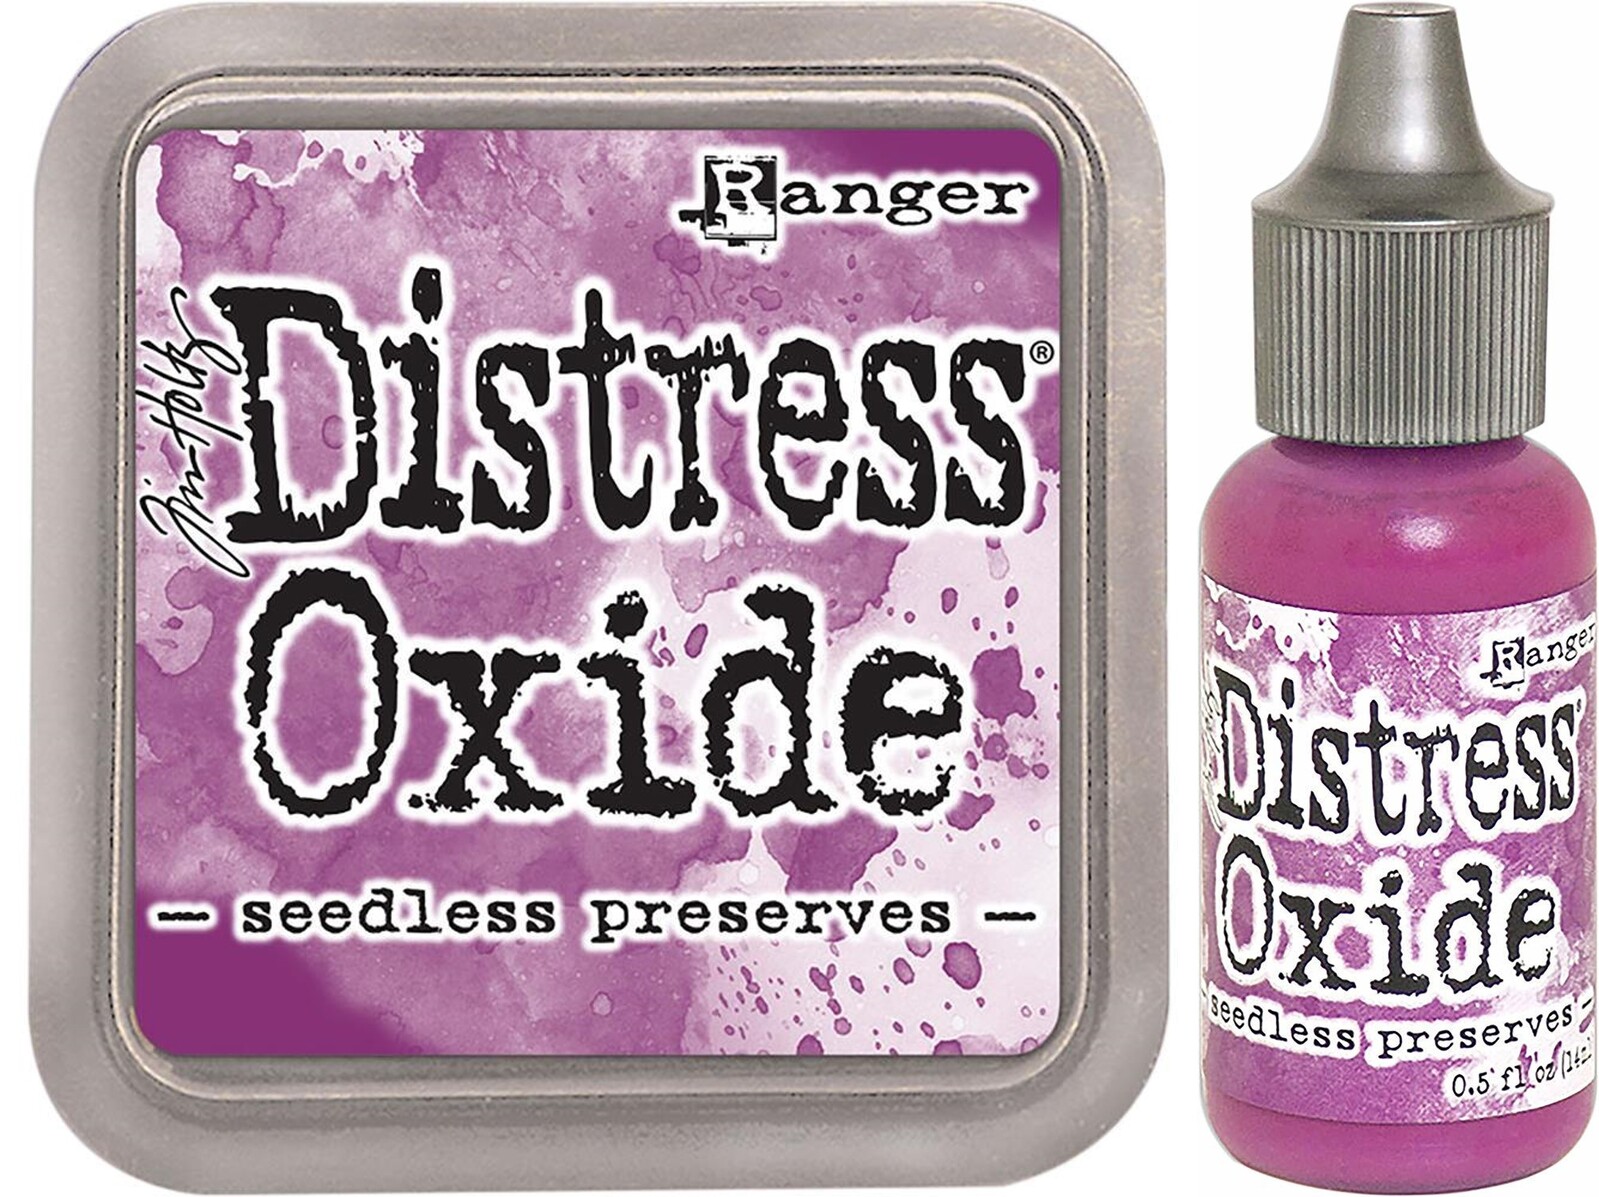 Tim Holtz Distress Oxide Ink Pad + Reinker Seedless Preserves